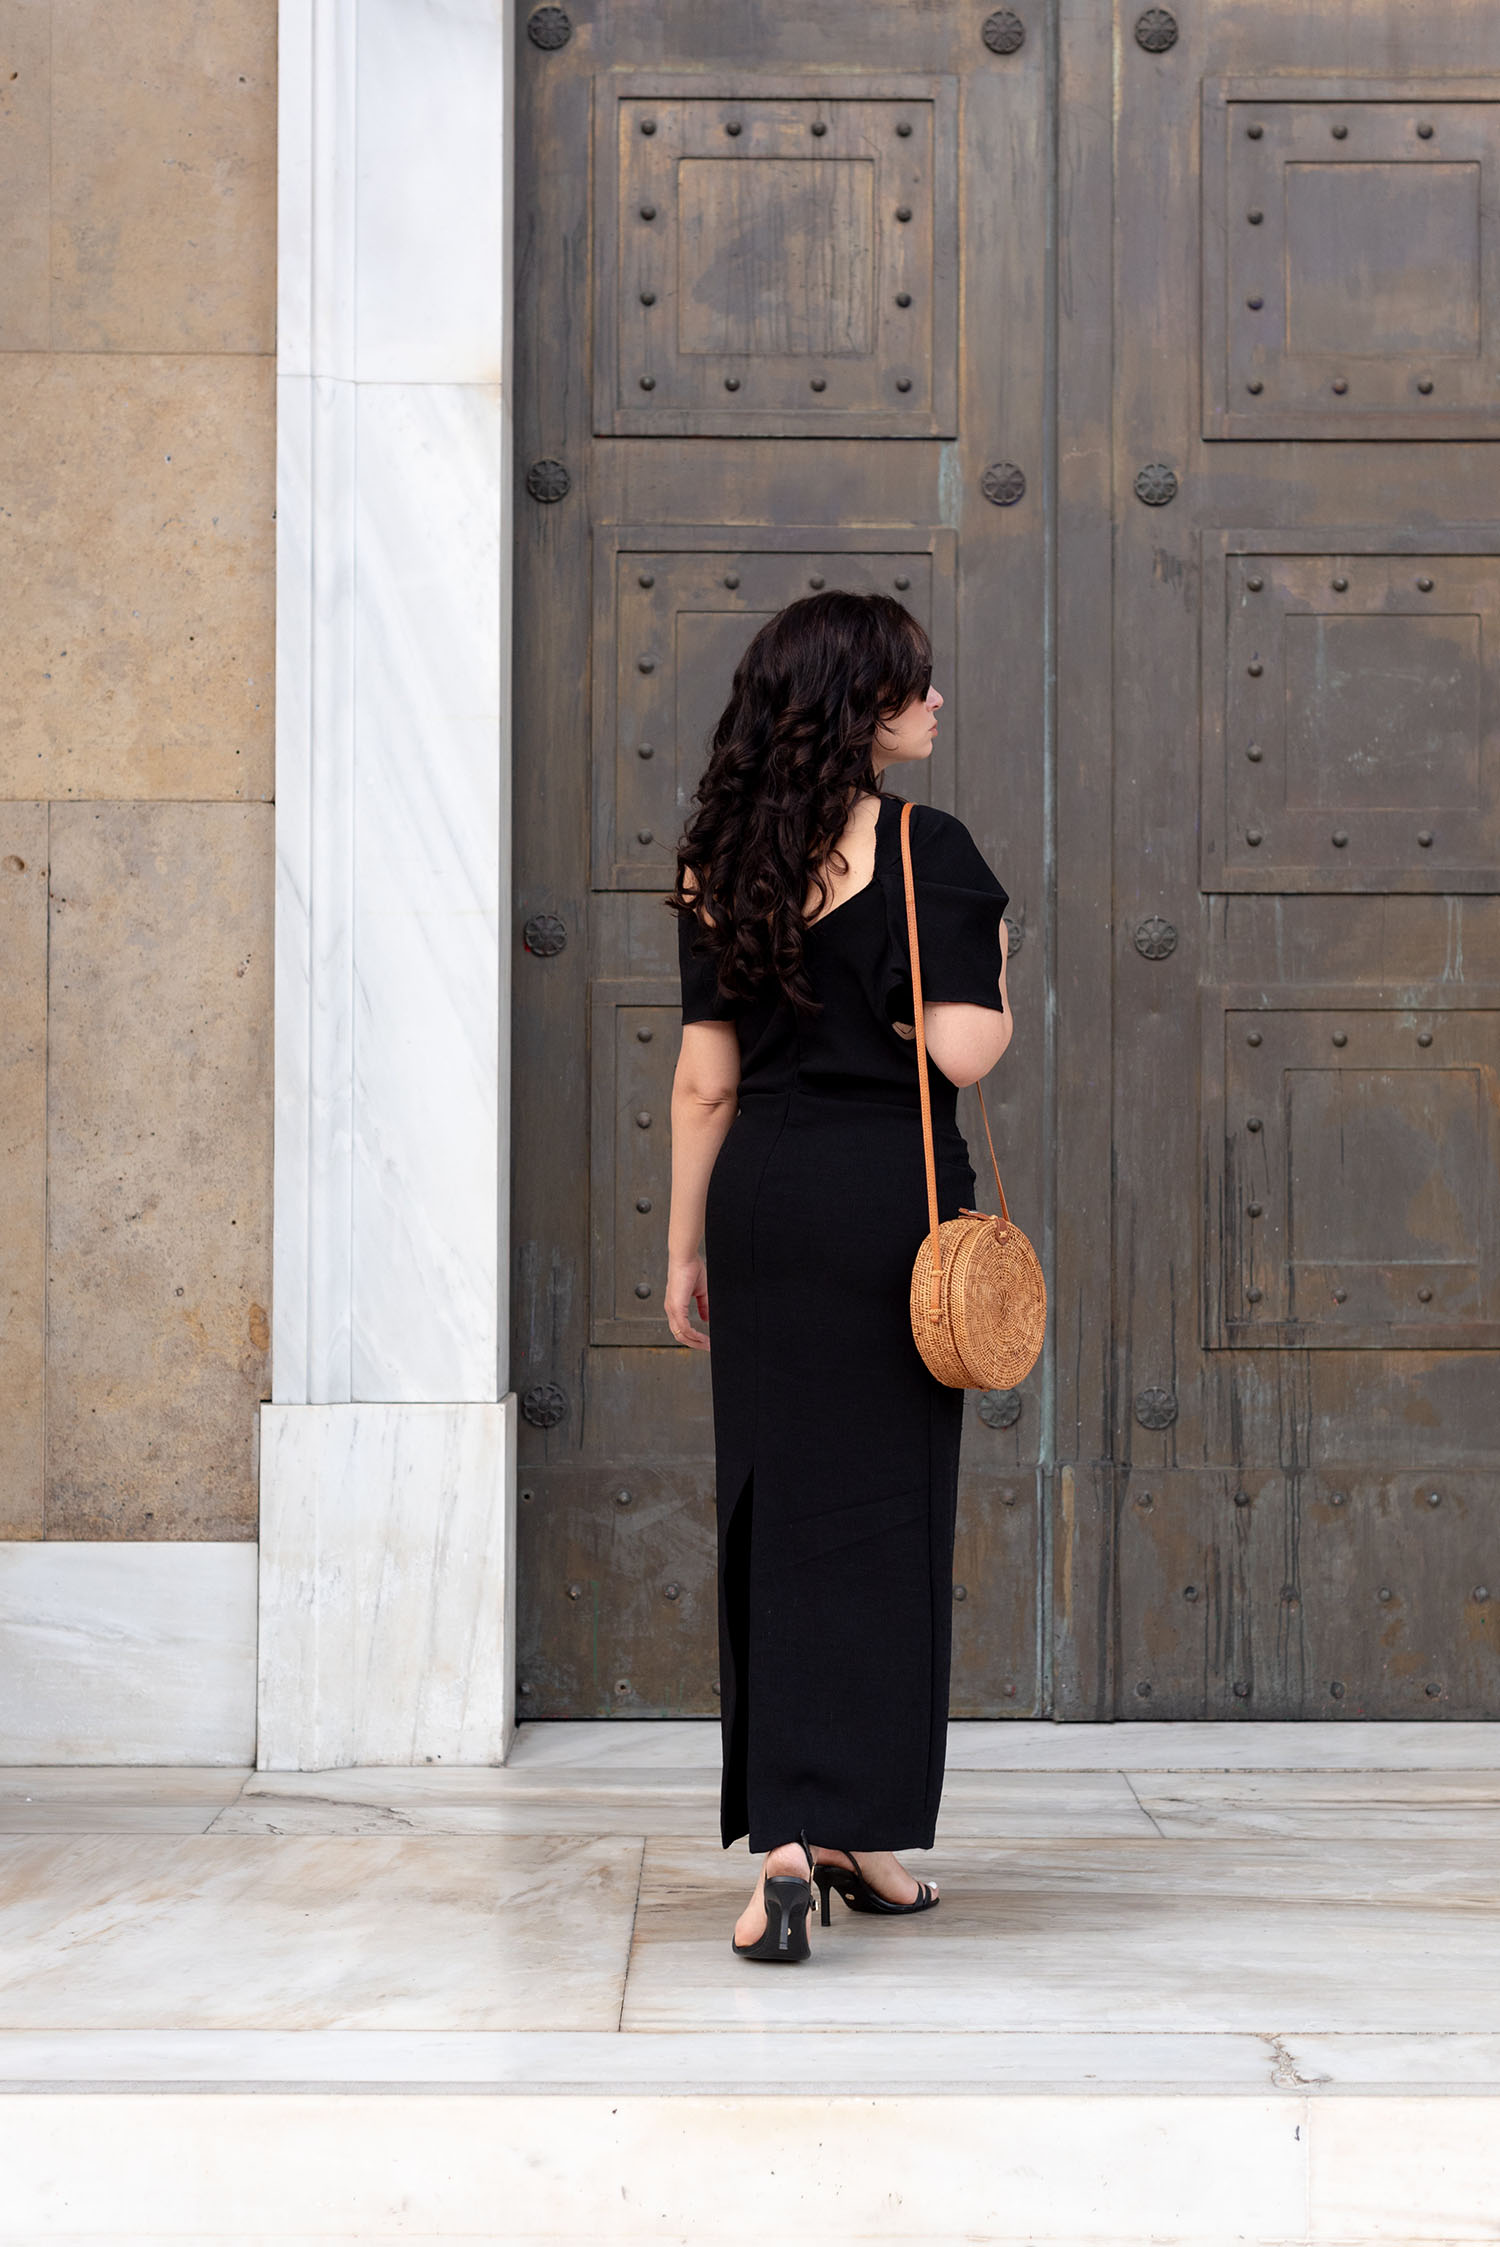 Coco & Vera - Zara black dress, Ellen James handbag, Zara sandals